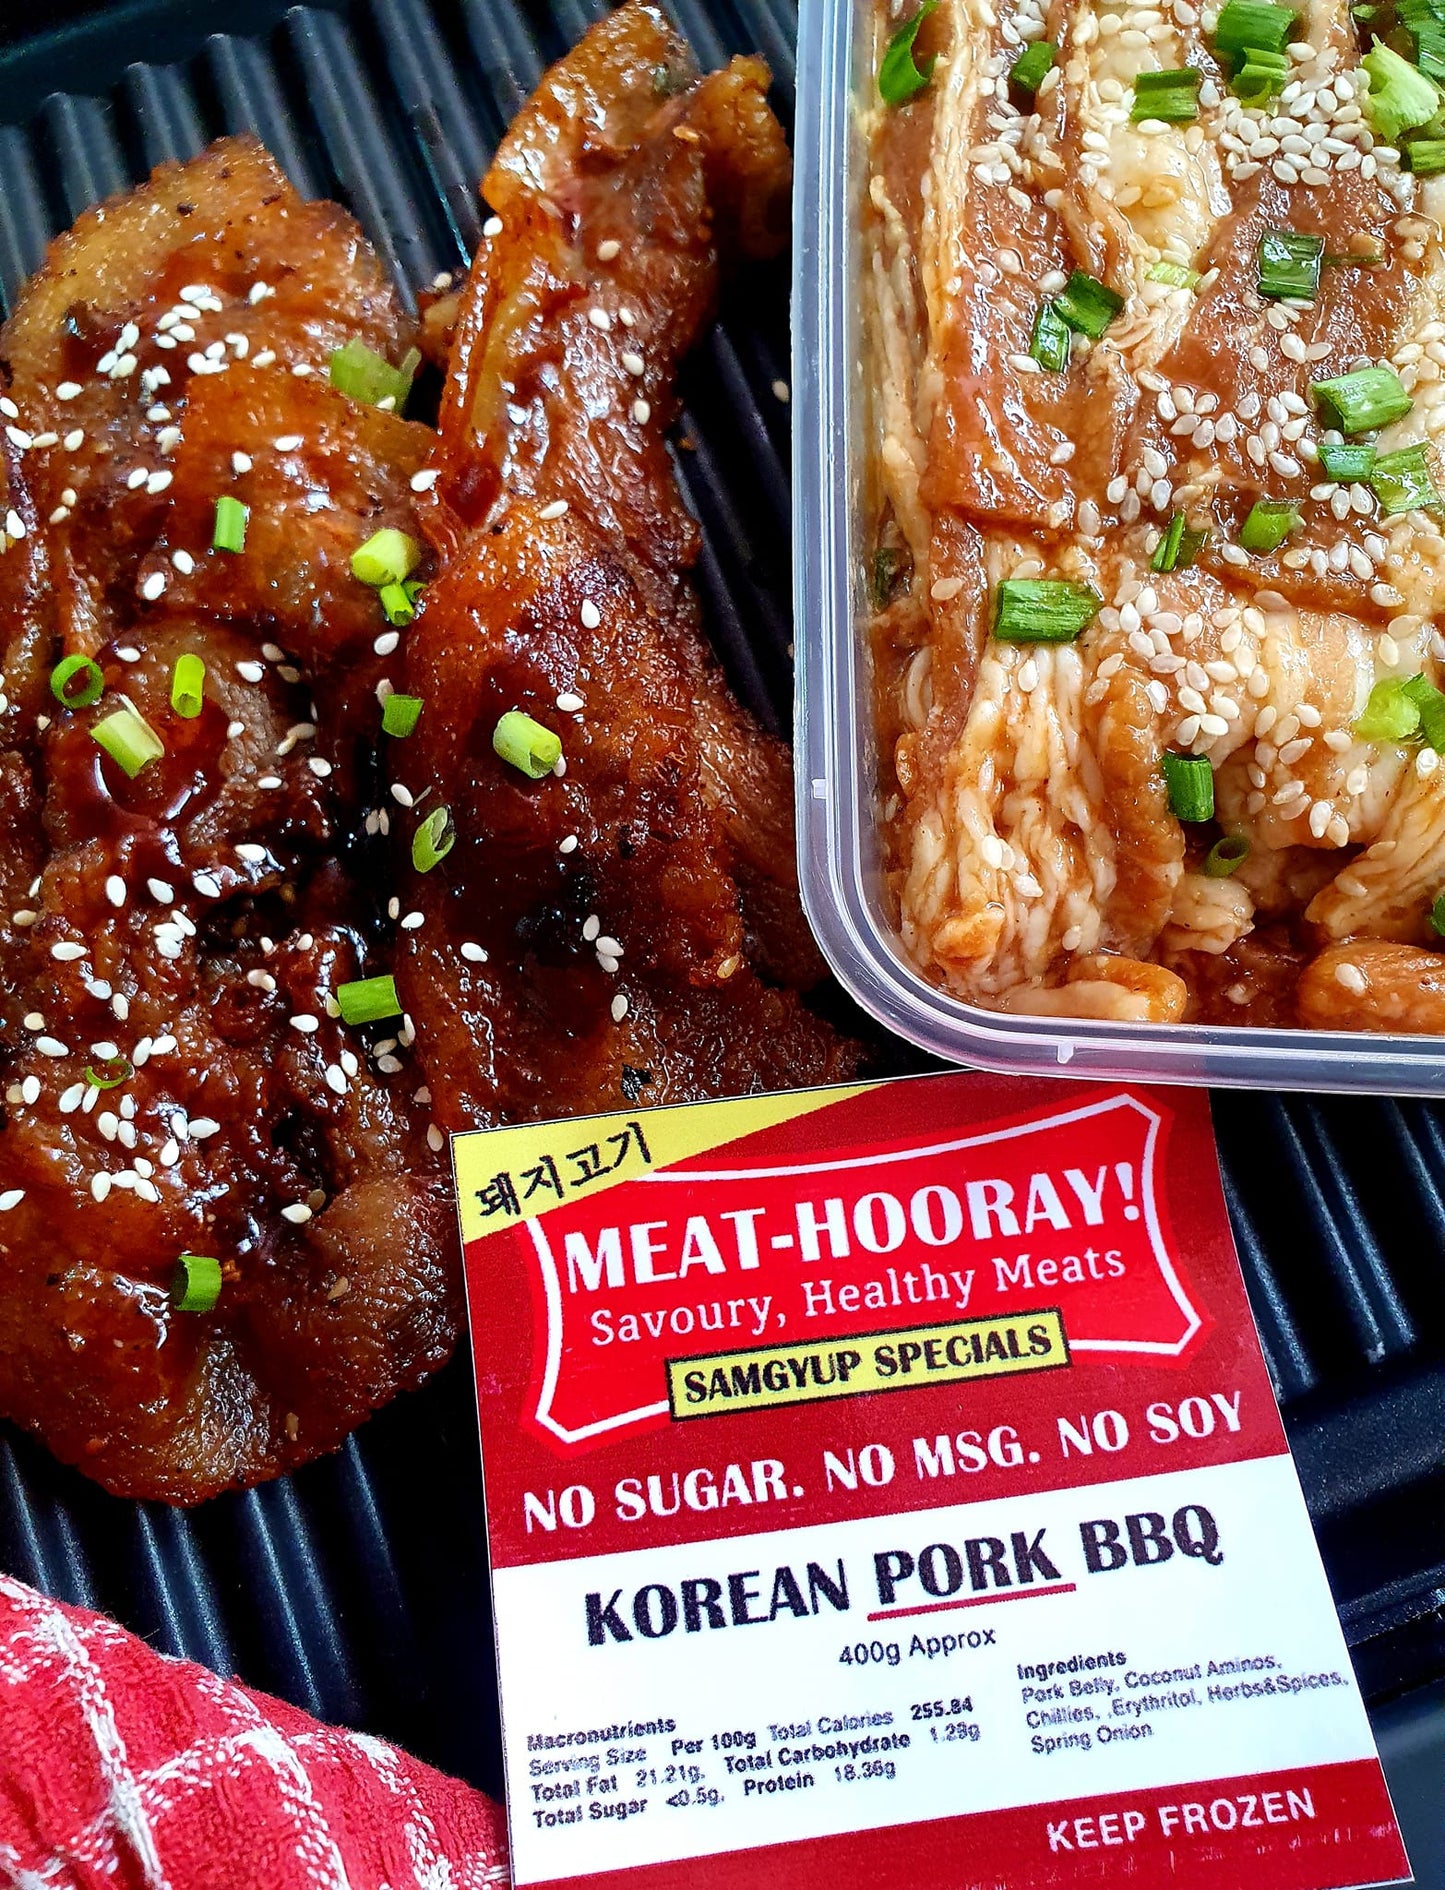 PerfectMatch Low-carb l Ready to Cook l Keto Samgyup Korean Pork BBQ l Meathooray l No Soy  l No Sugar l  No MSG  l  400g